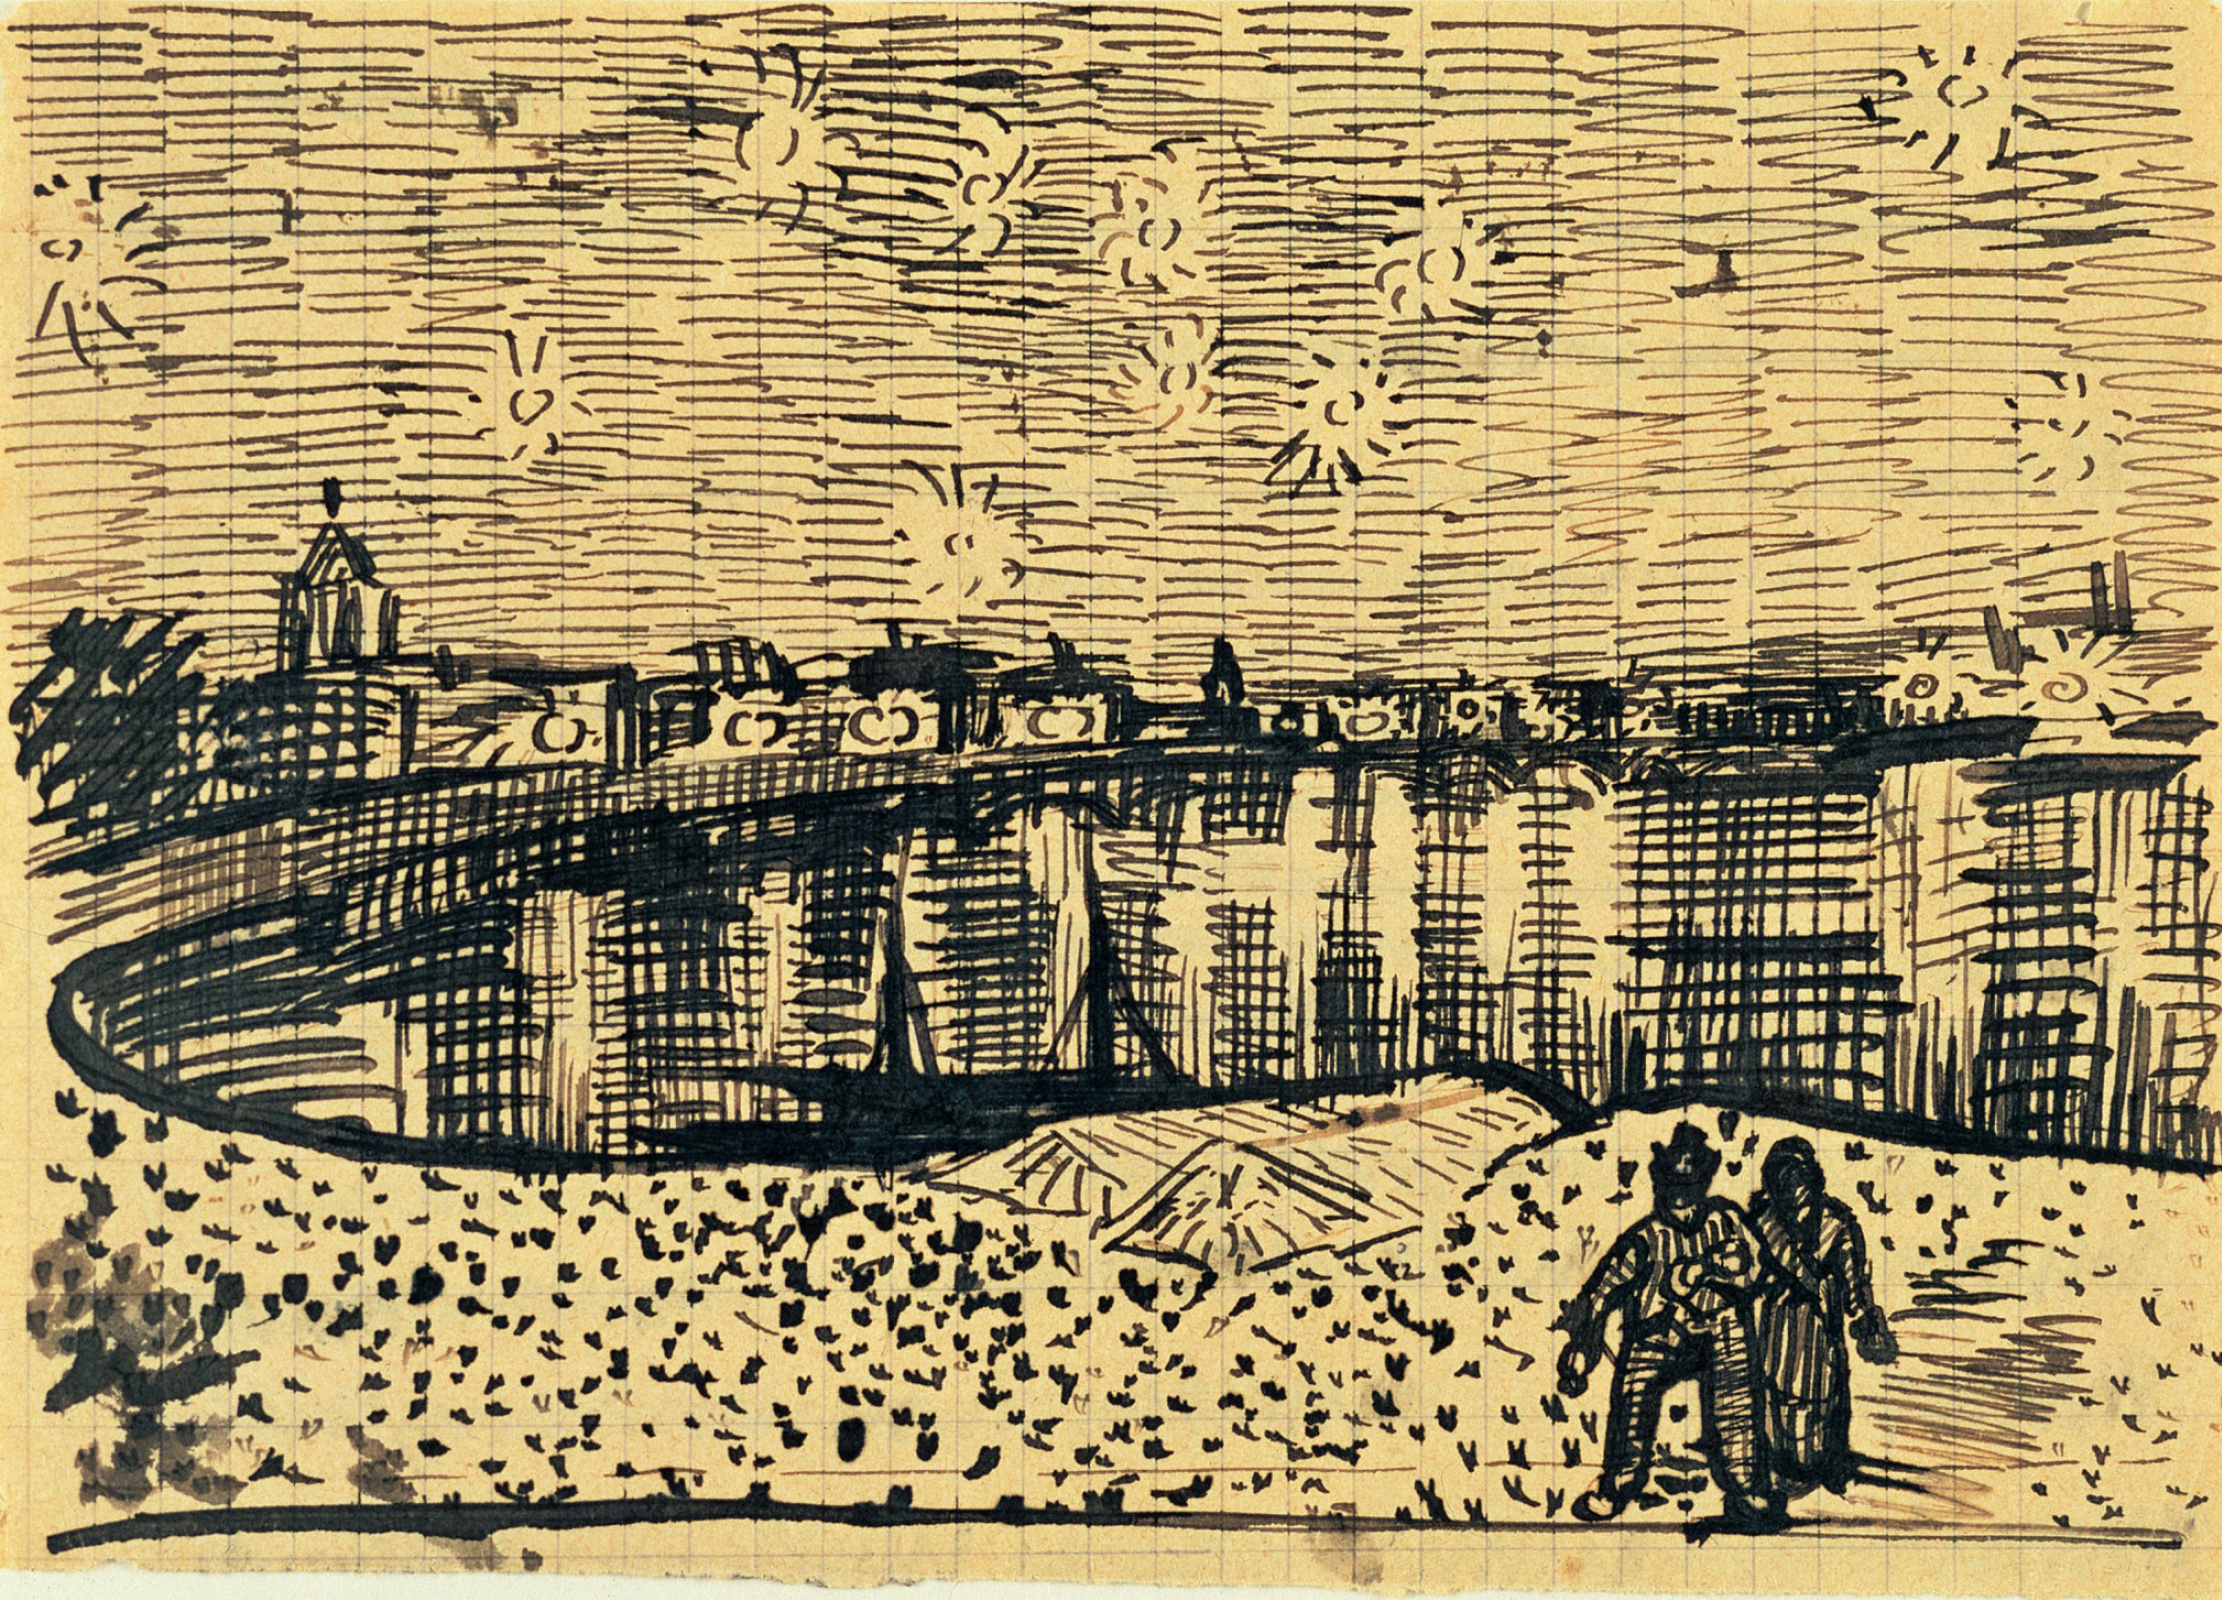 Notte stellata di Van Gogh: analisi